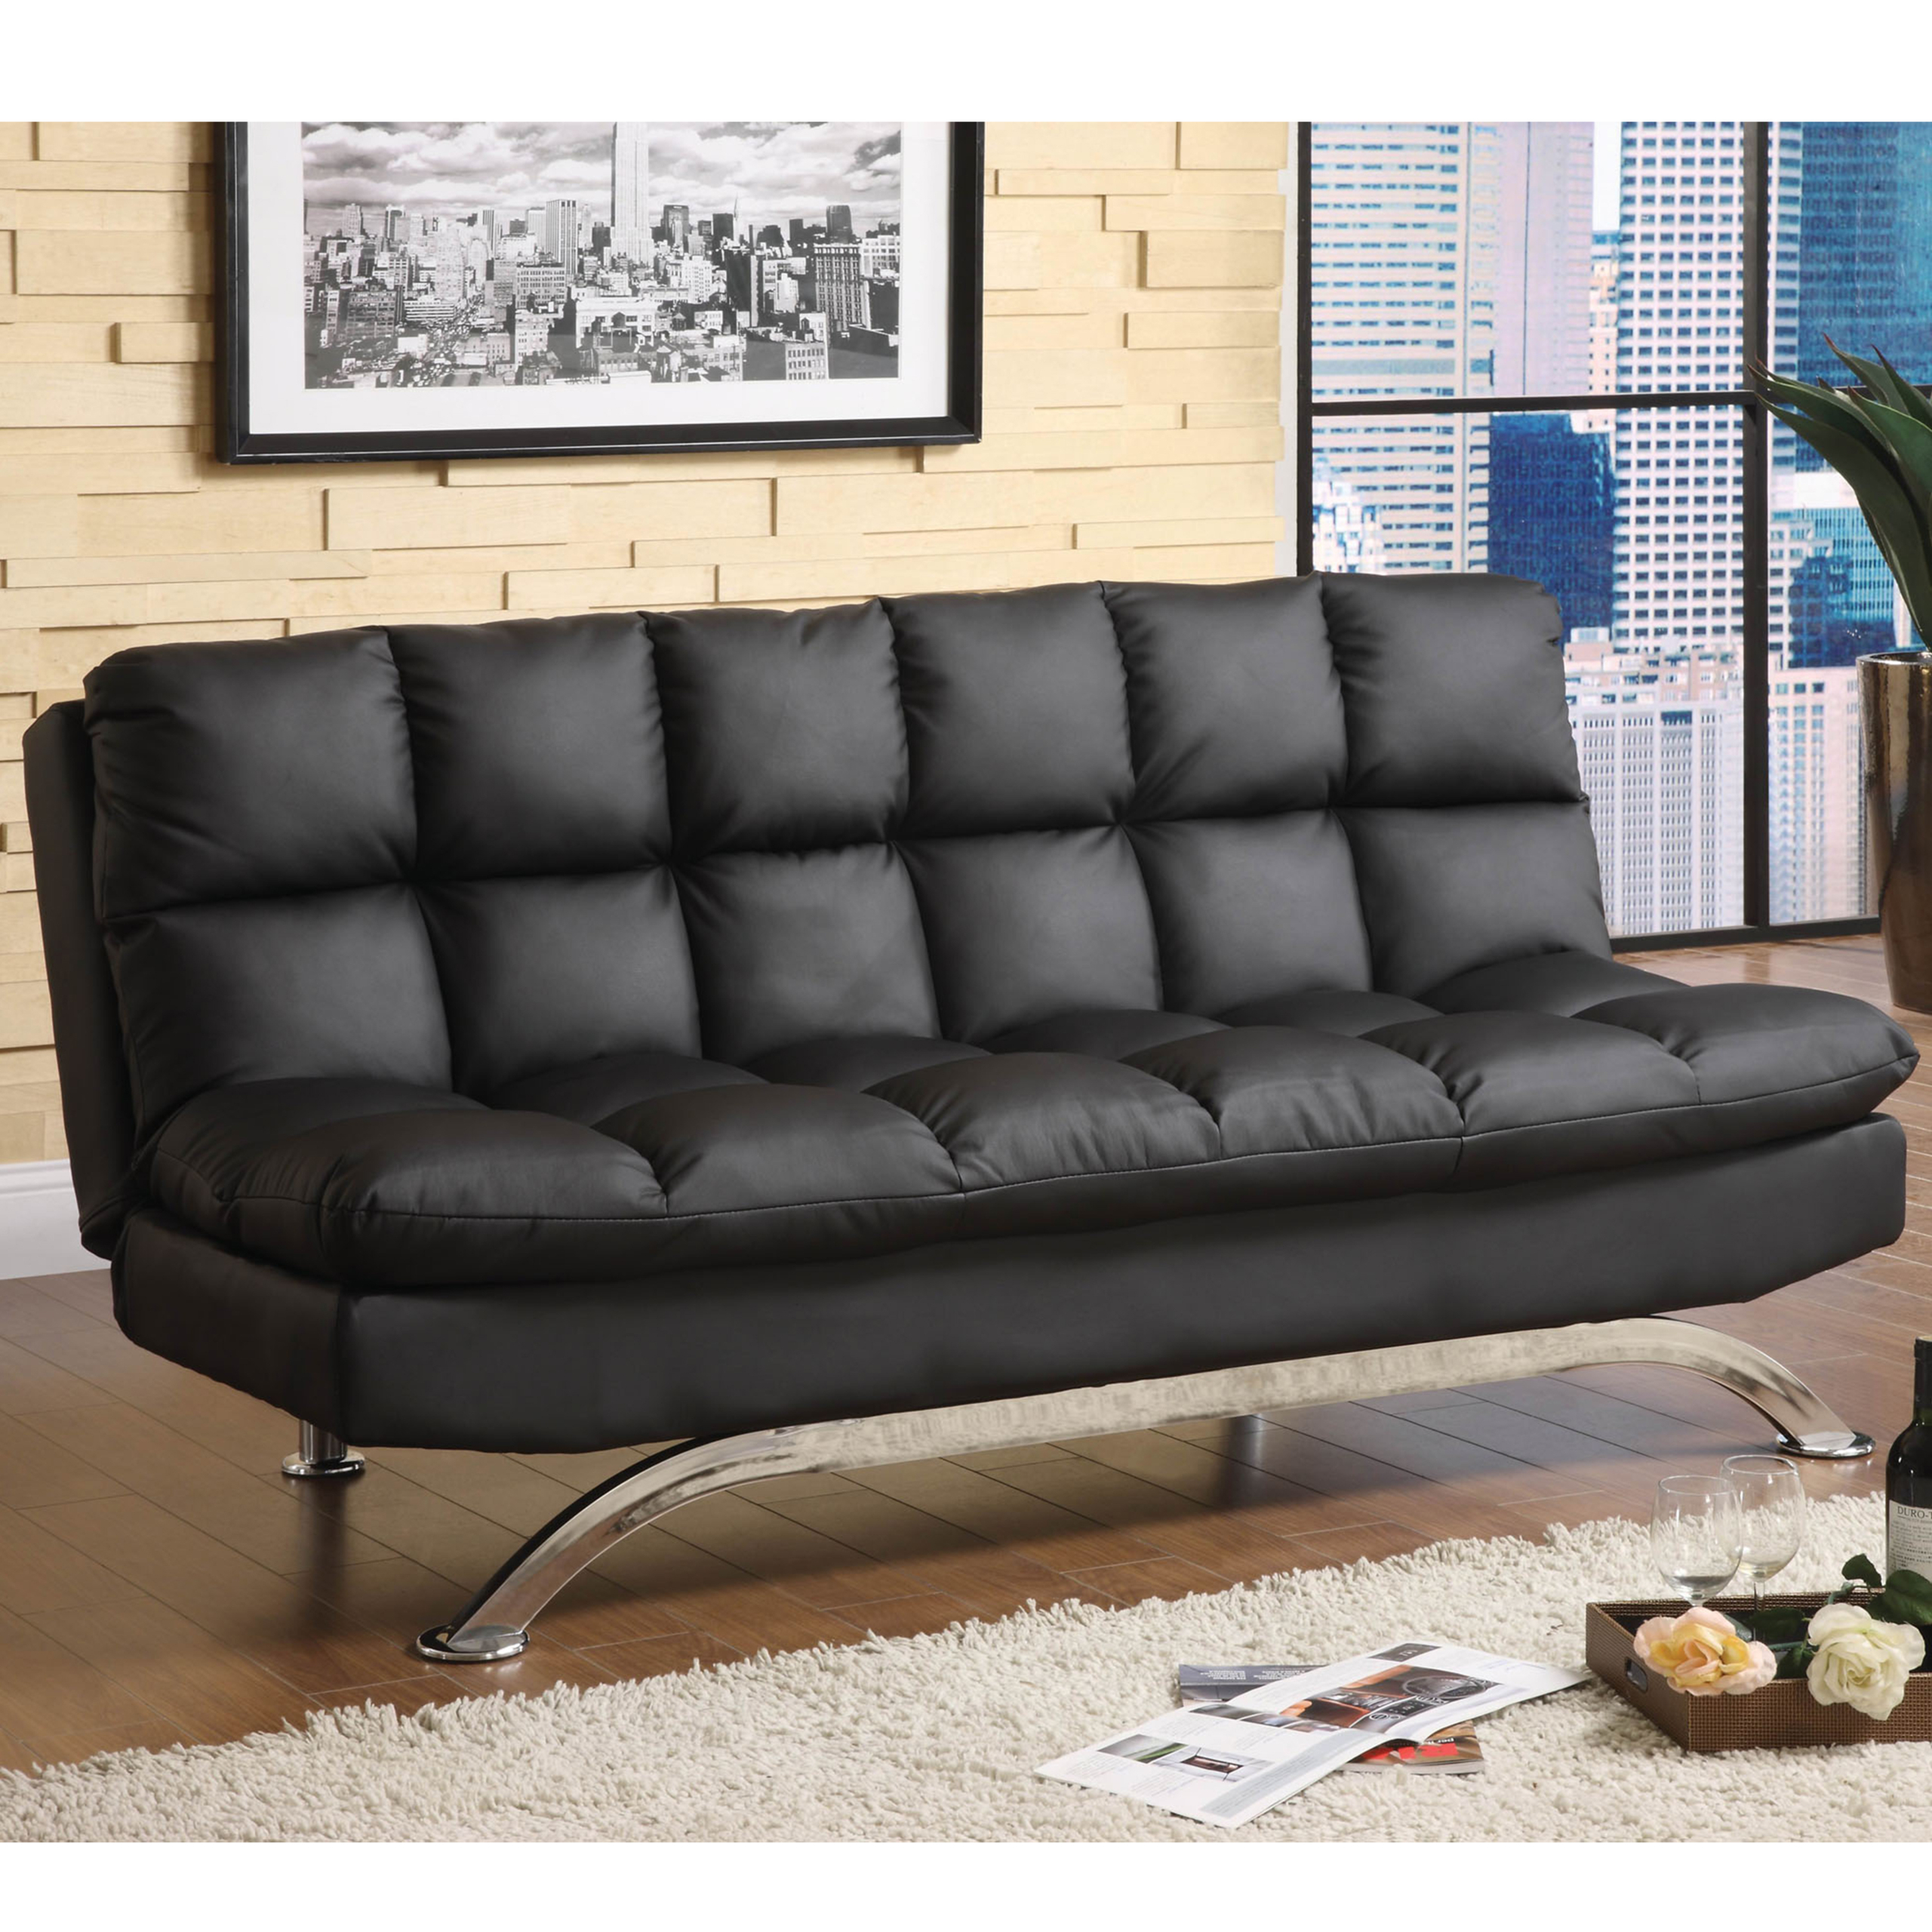 Mussina Black Leatherette Finish Futon Sofa Bed